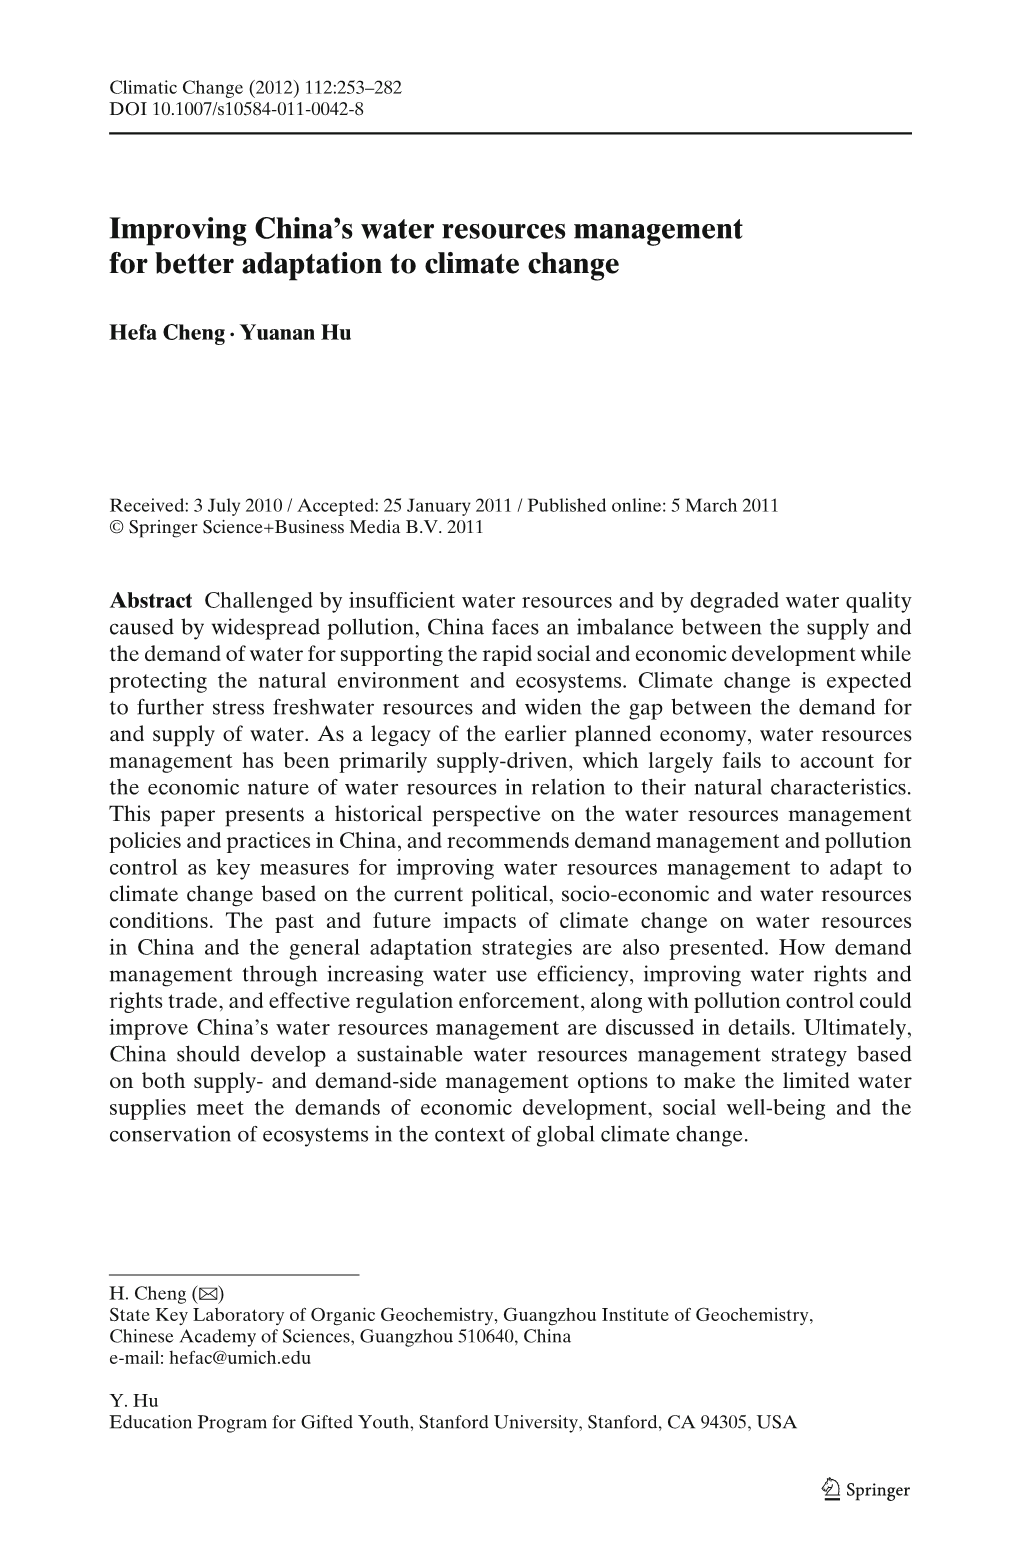 Cheng & Hu. 2012. China Water Resource Management